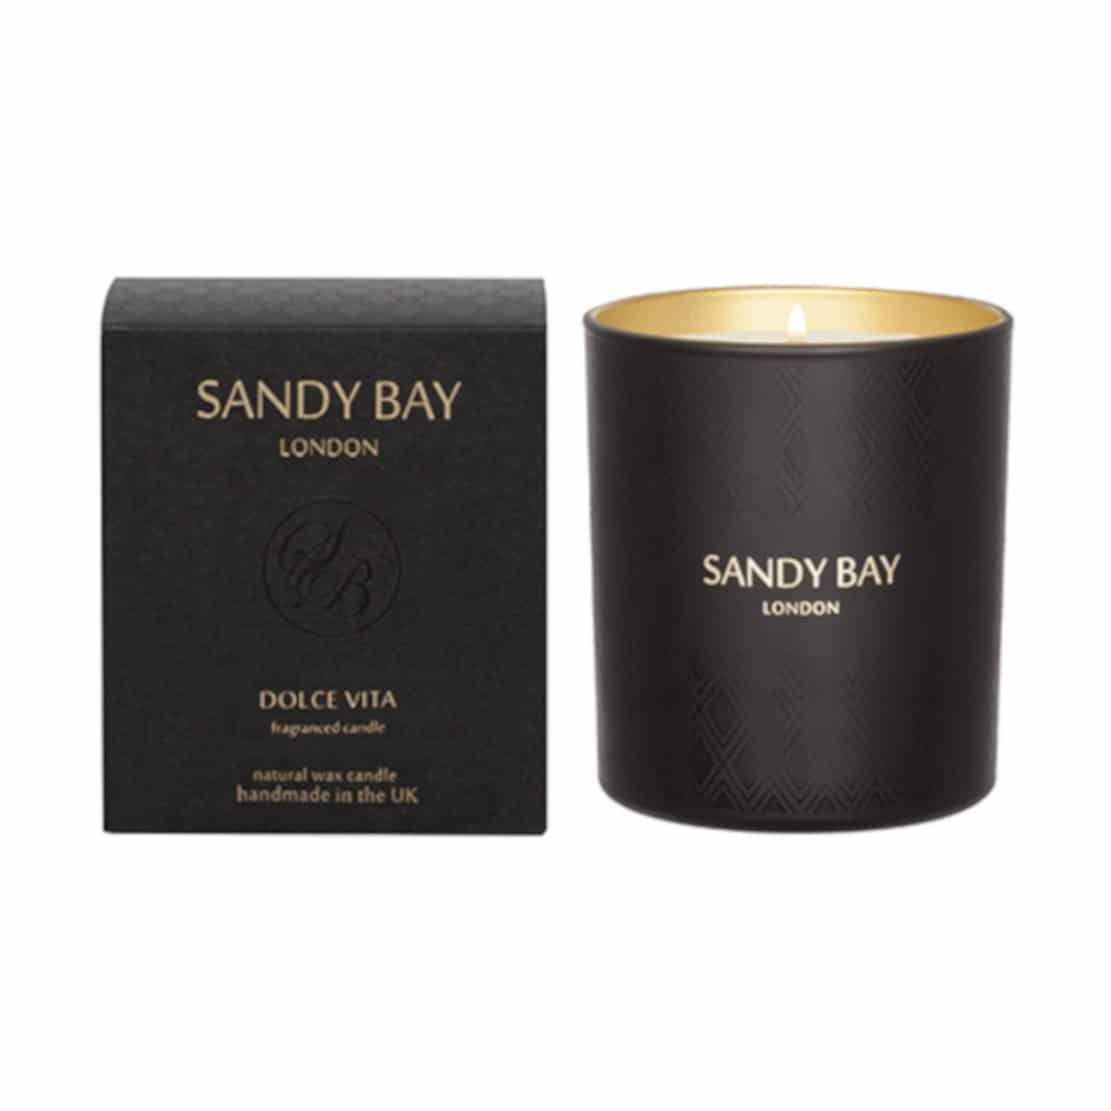 Sandy Bay Dolce Vita 30cl candle.